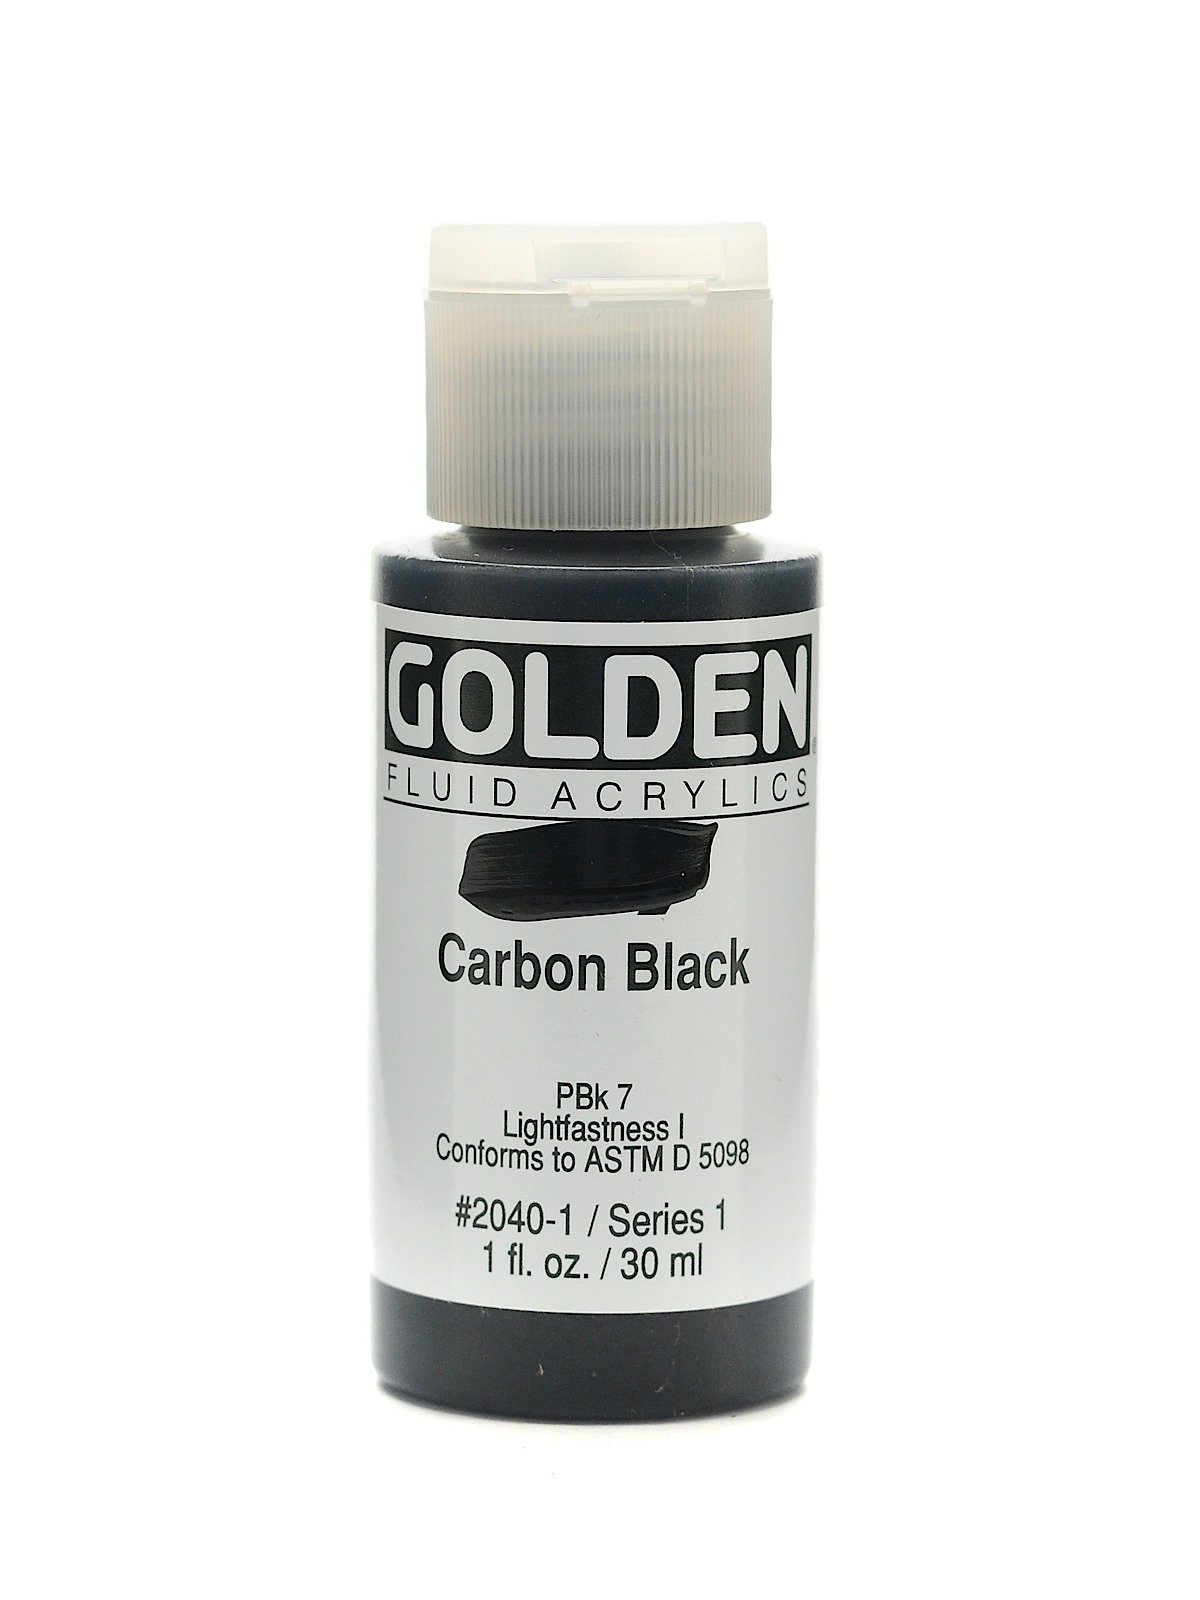 Fluid Acrylics carbon black 1 oz.